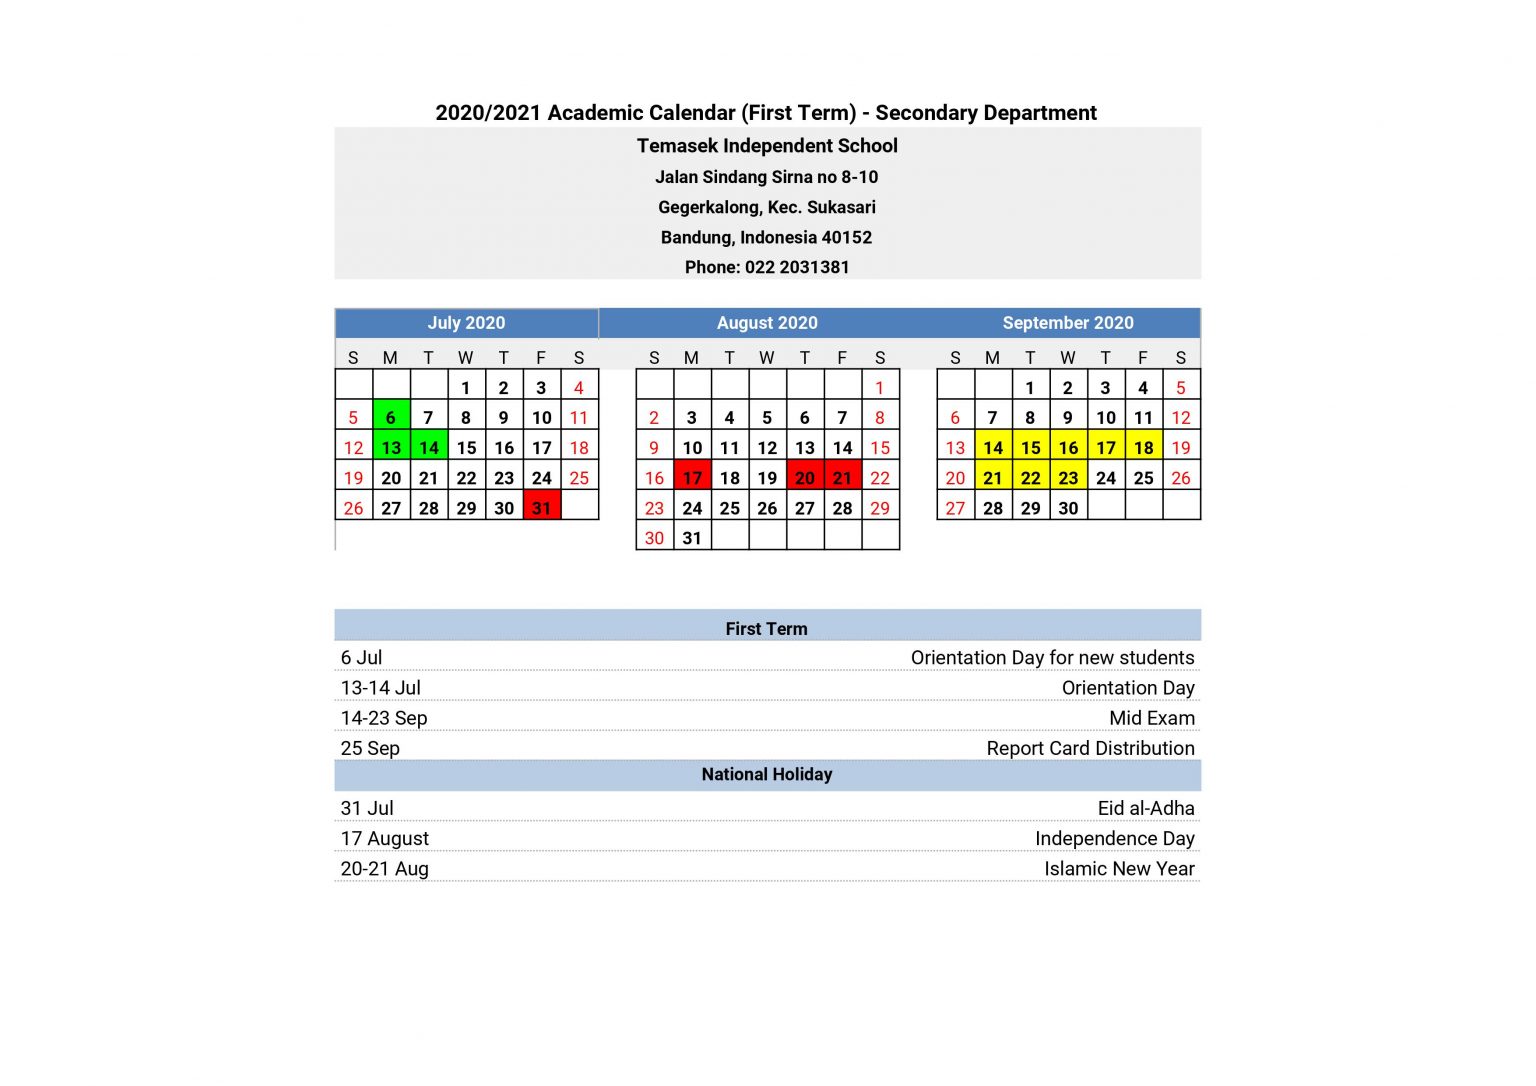 presentation secondary school calendar